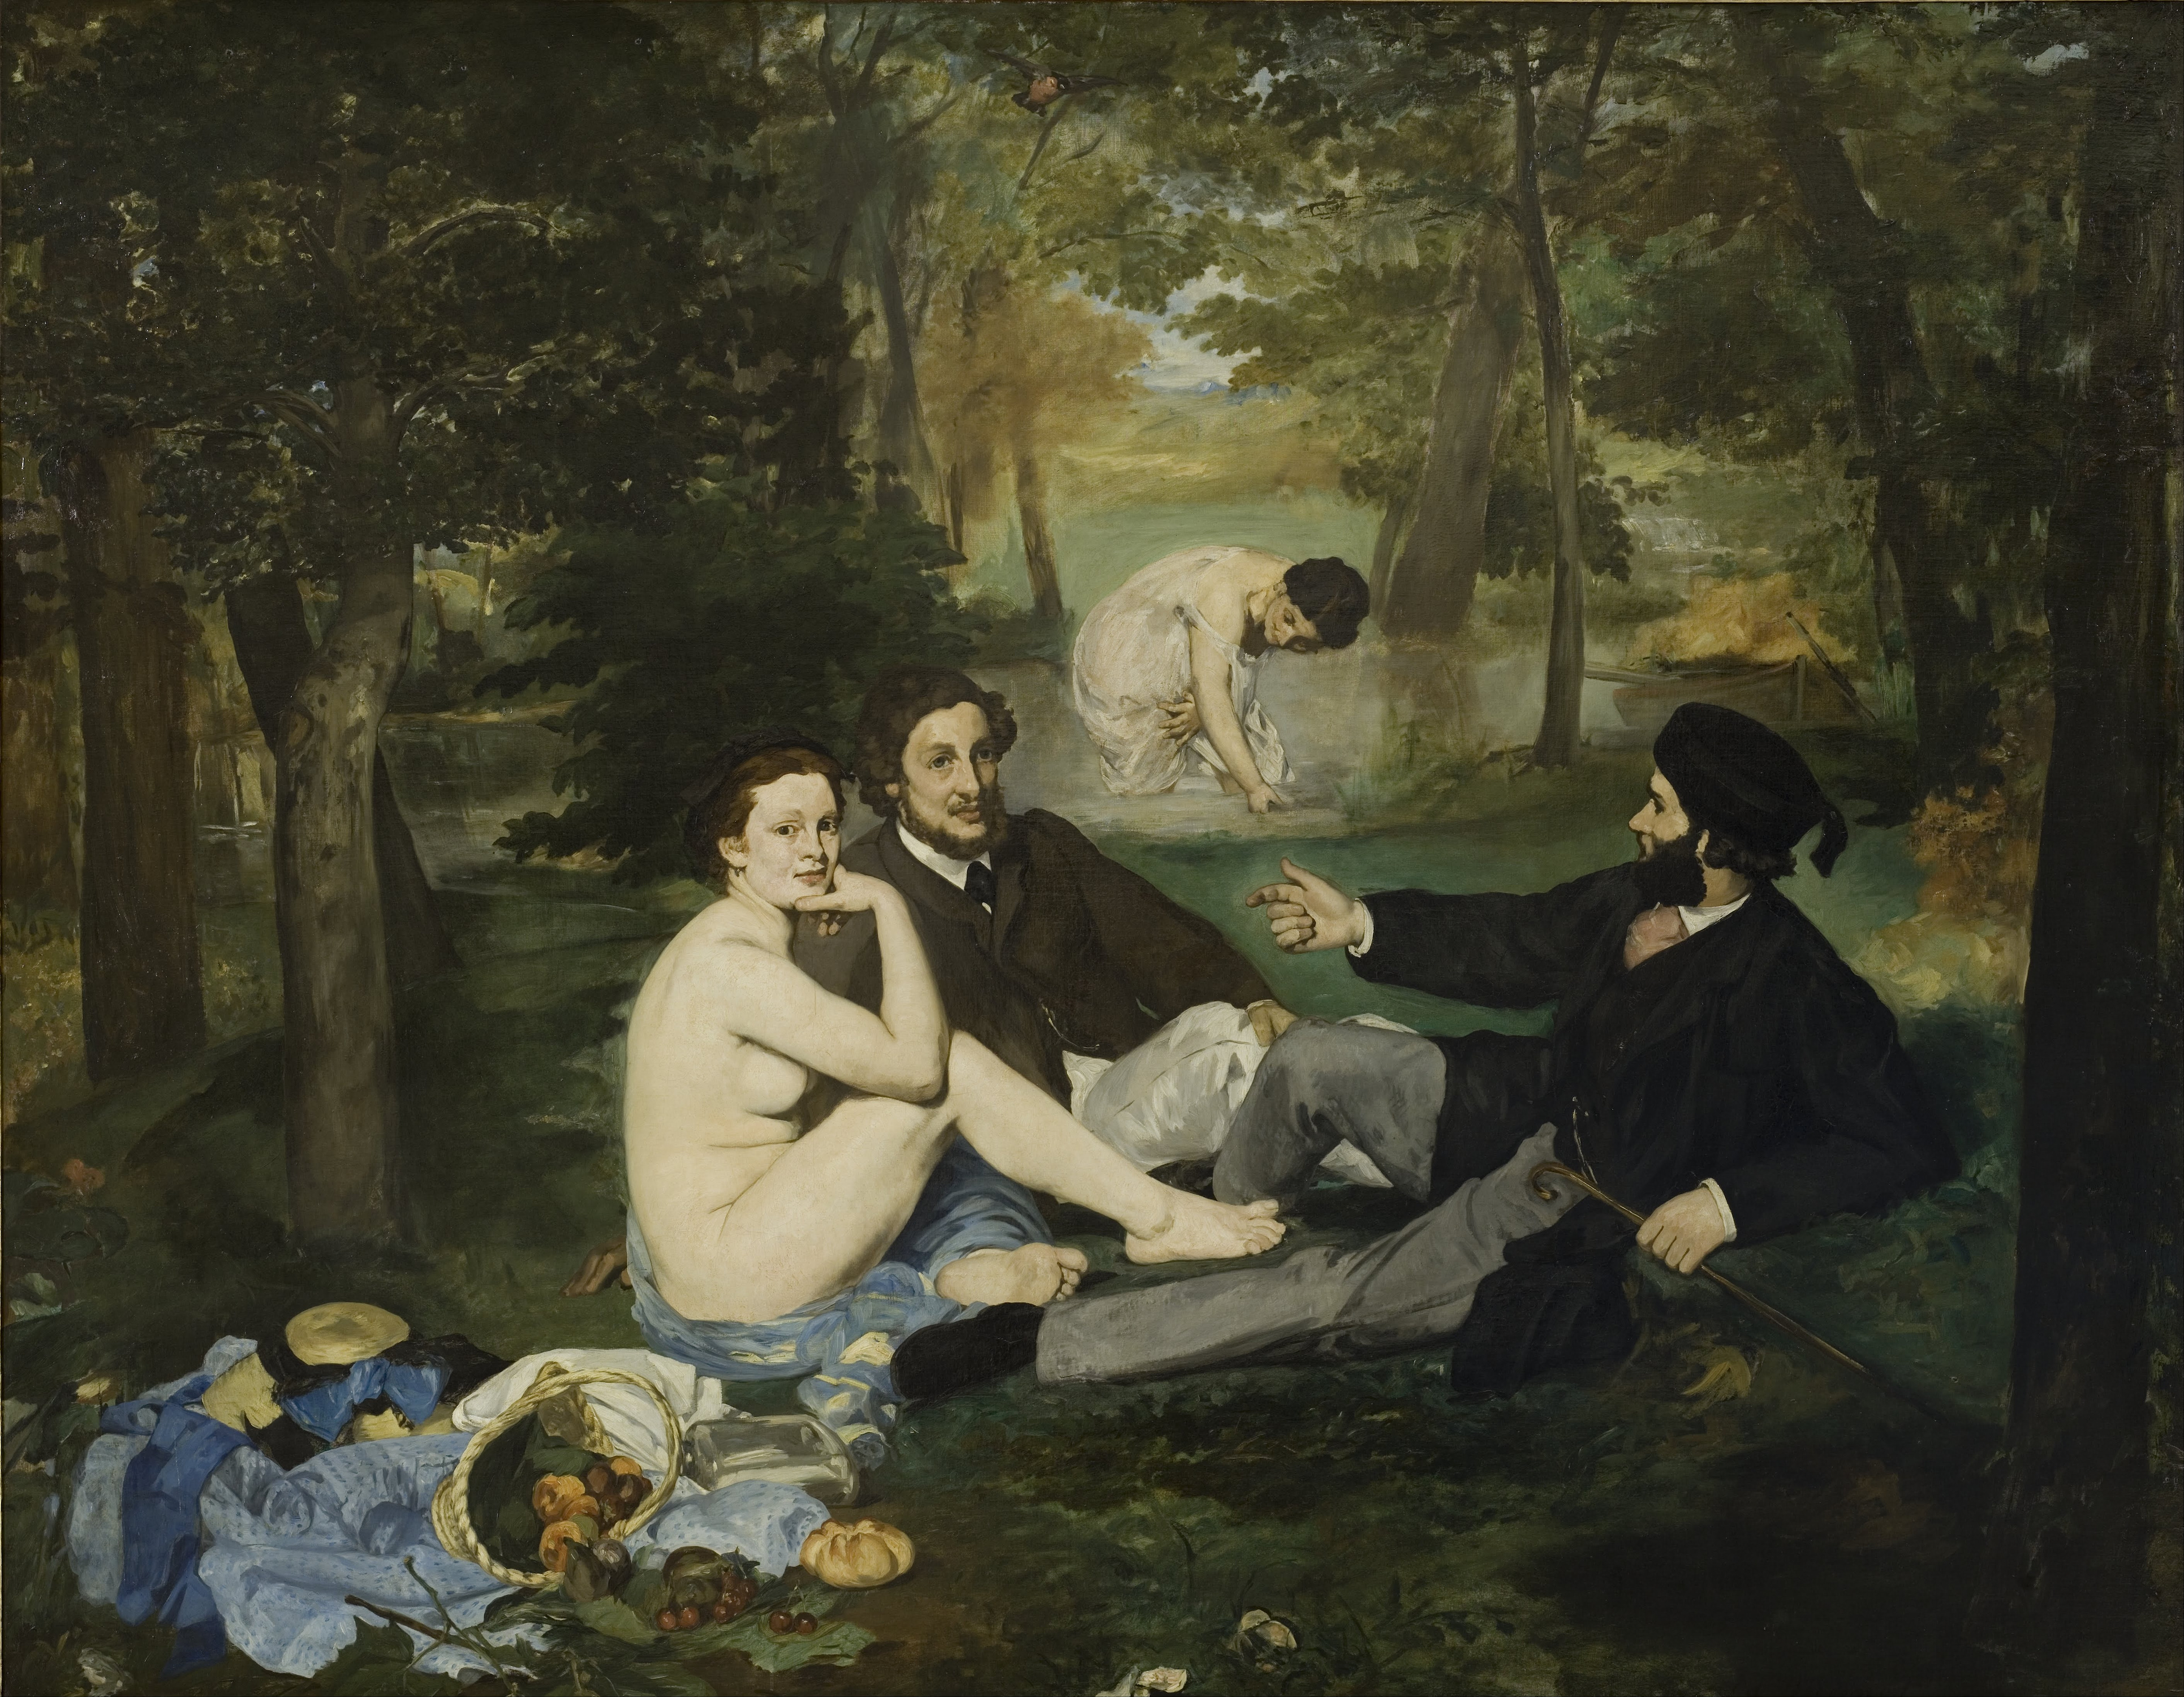 Çimlerde Öğle Yemeği by Édouard Manet - 1862-1863 - 208 × 265 cm Musée d'Orsay